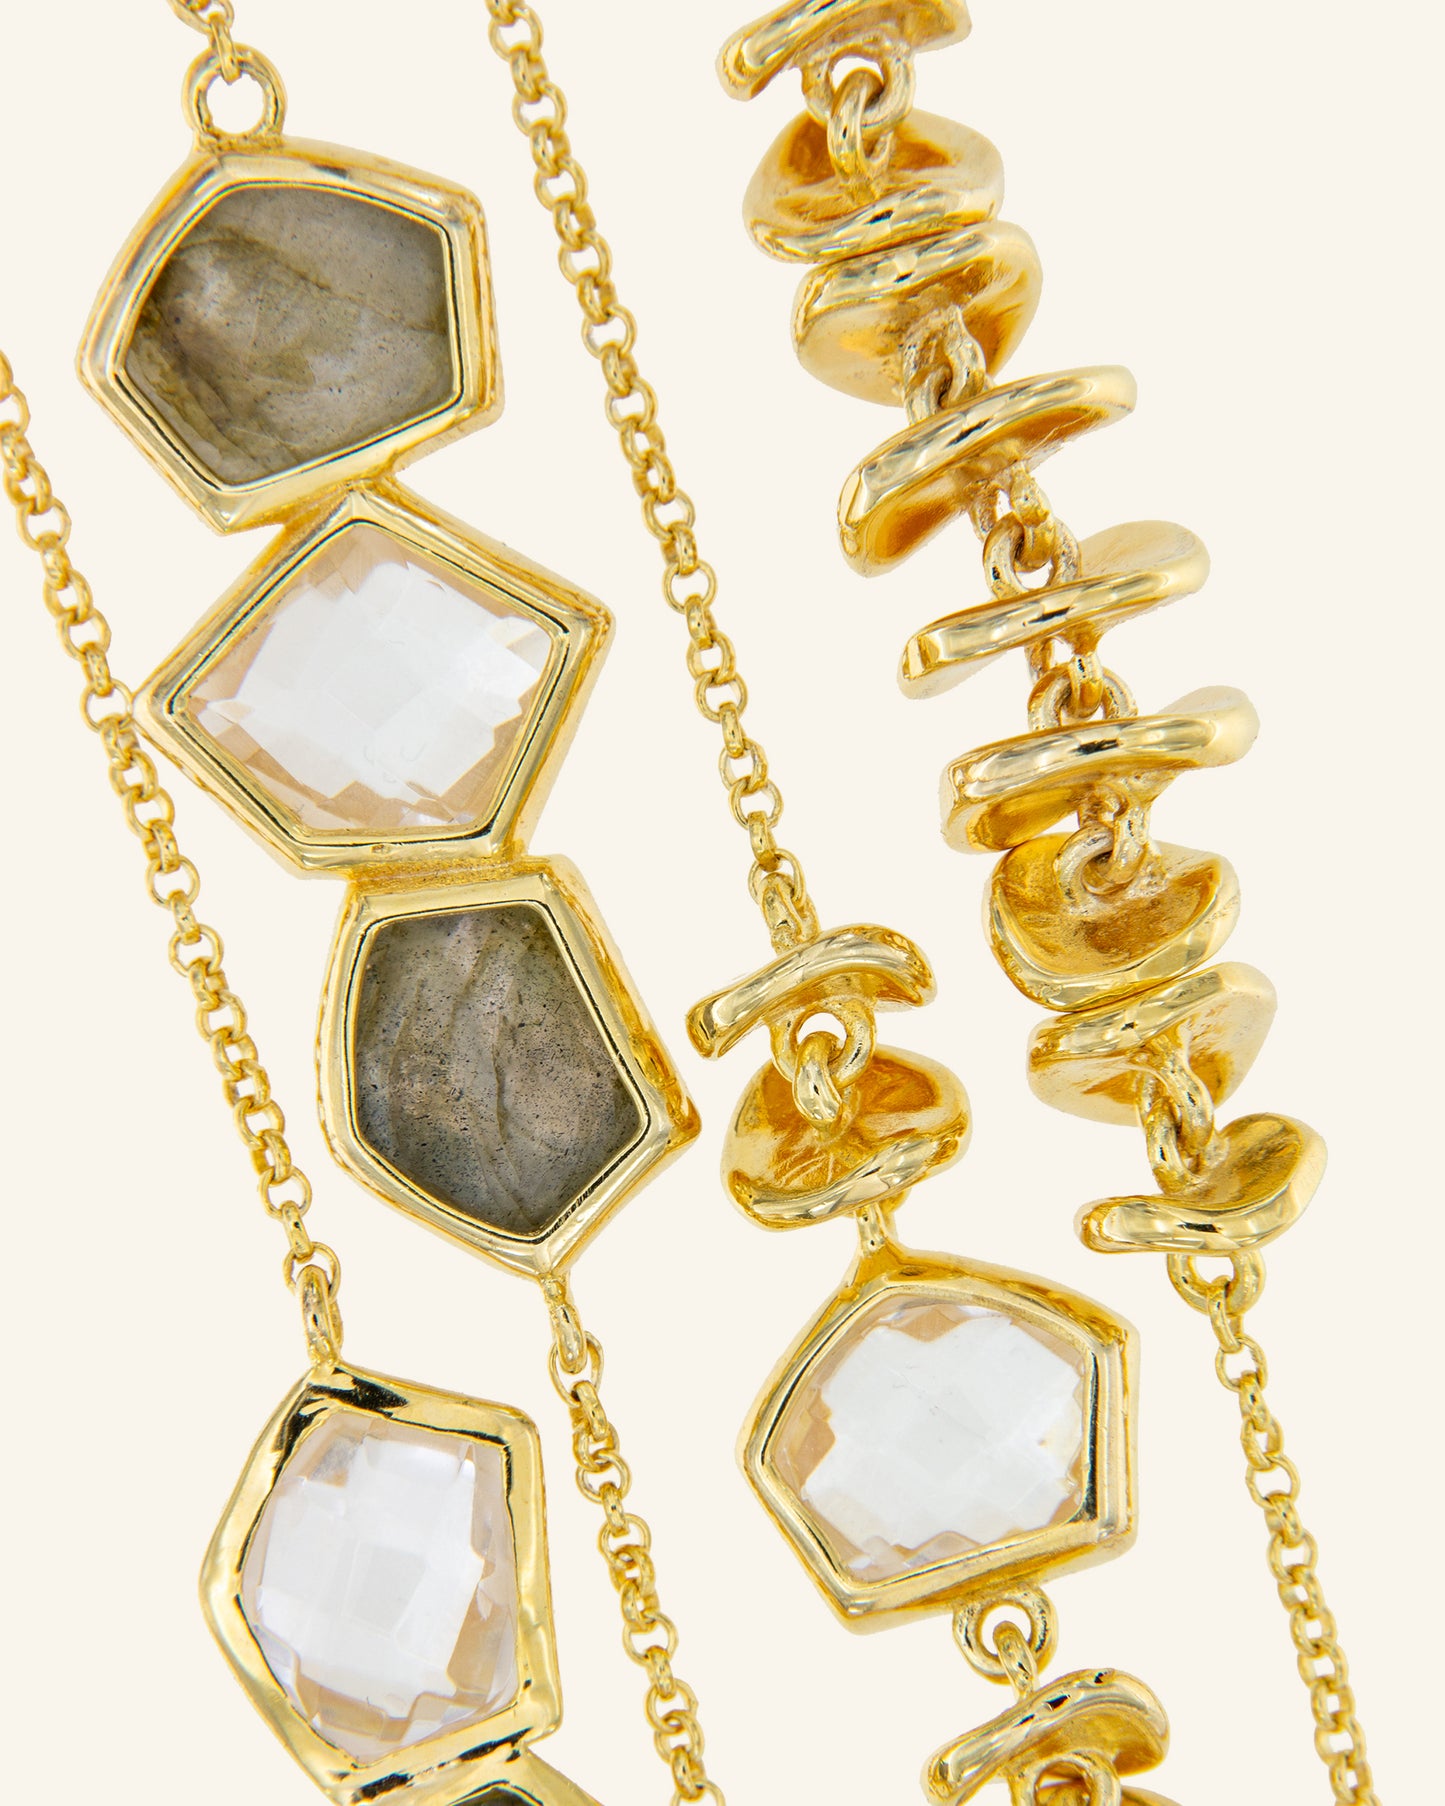 Nunatak necklace with labradorite and colorless quartz